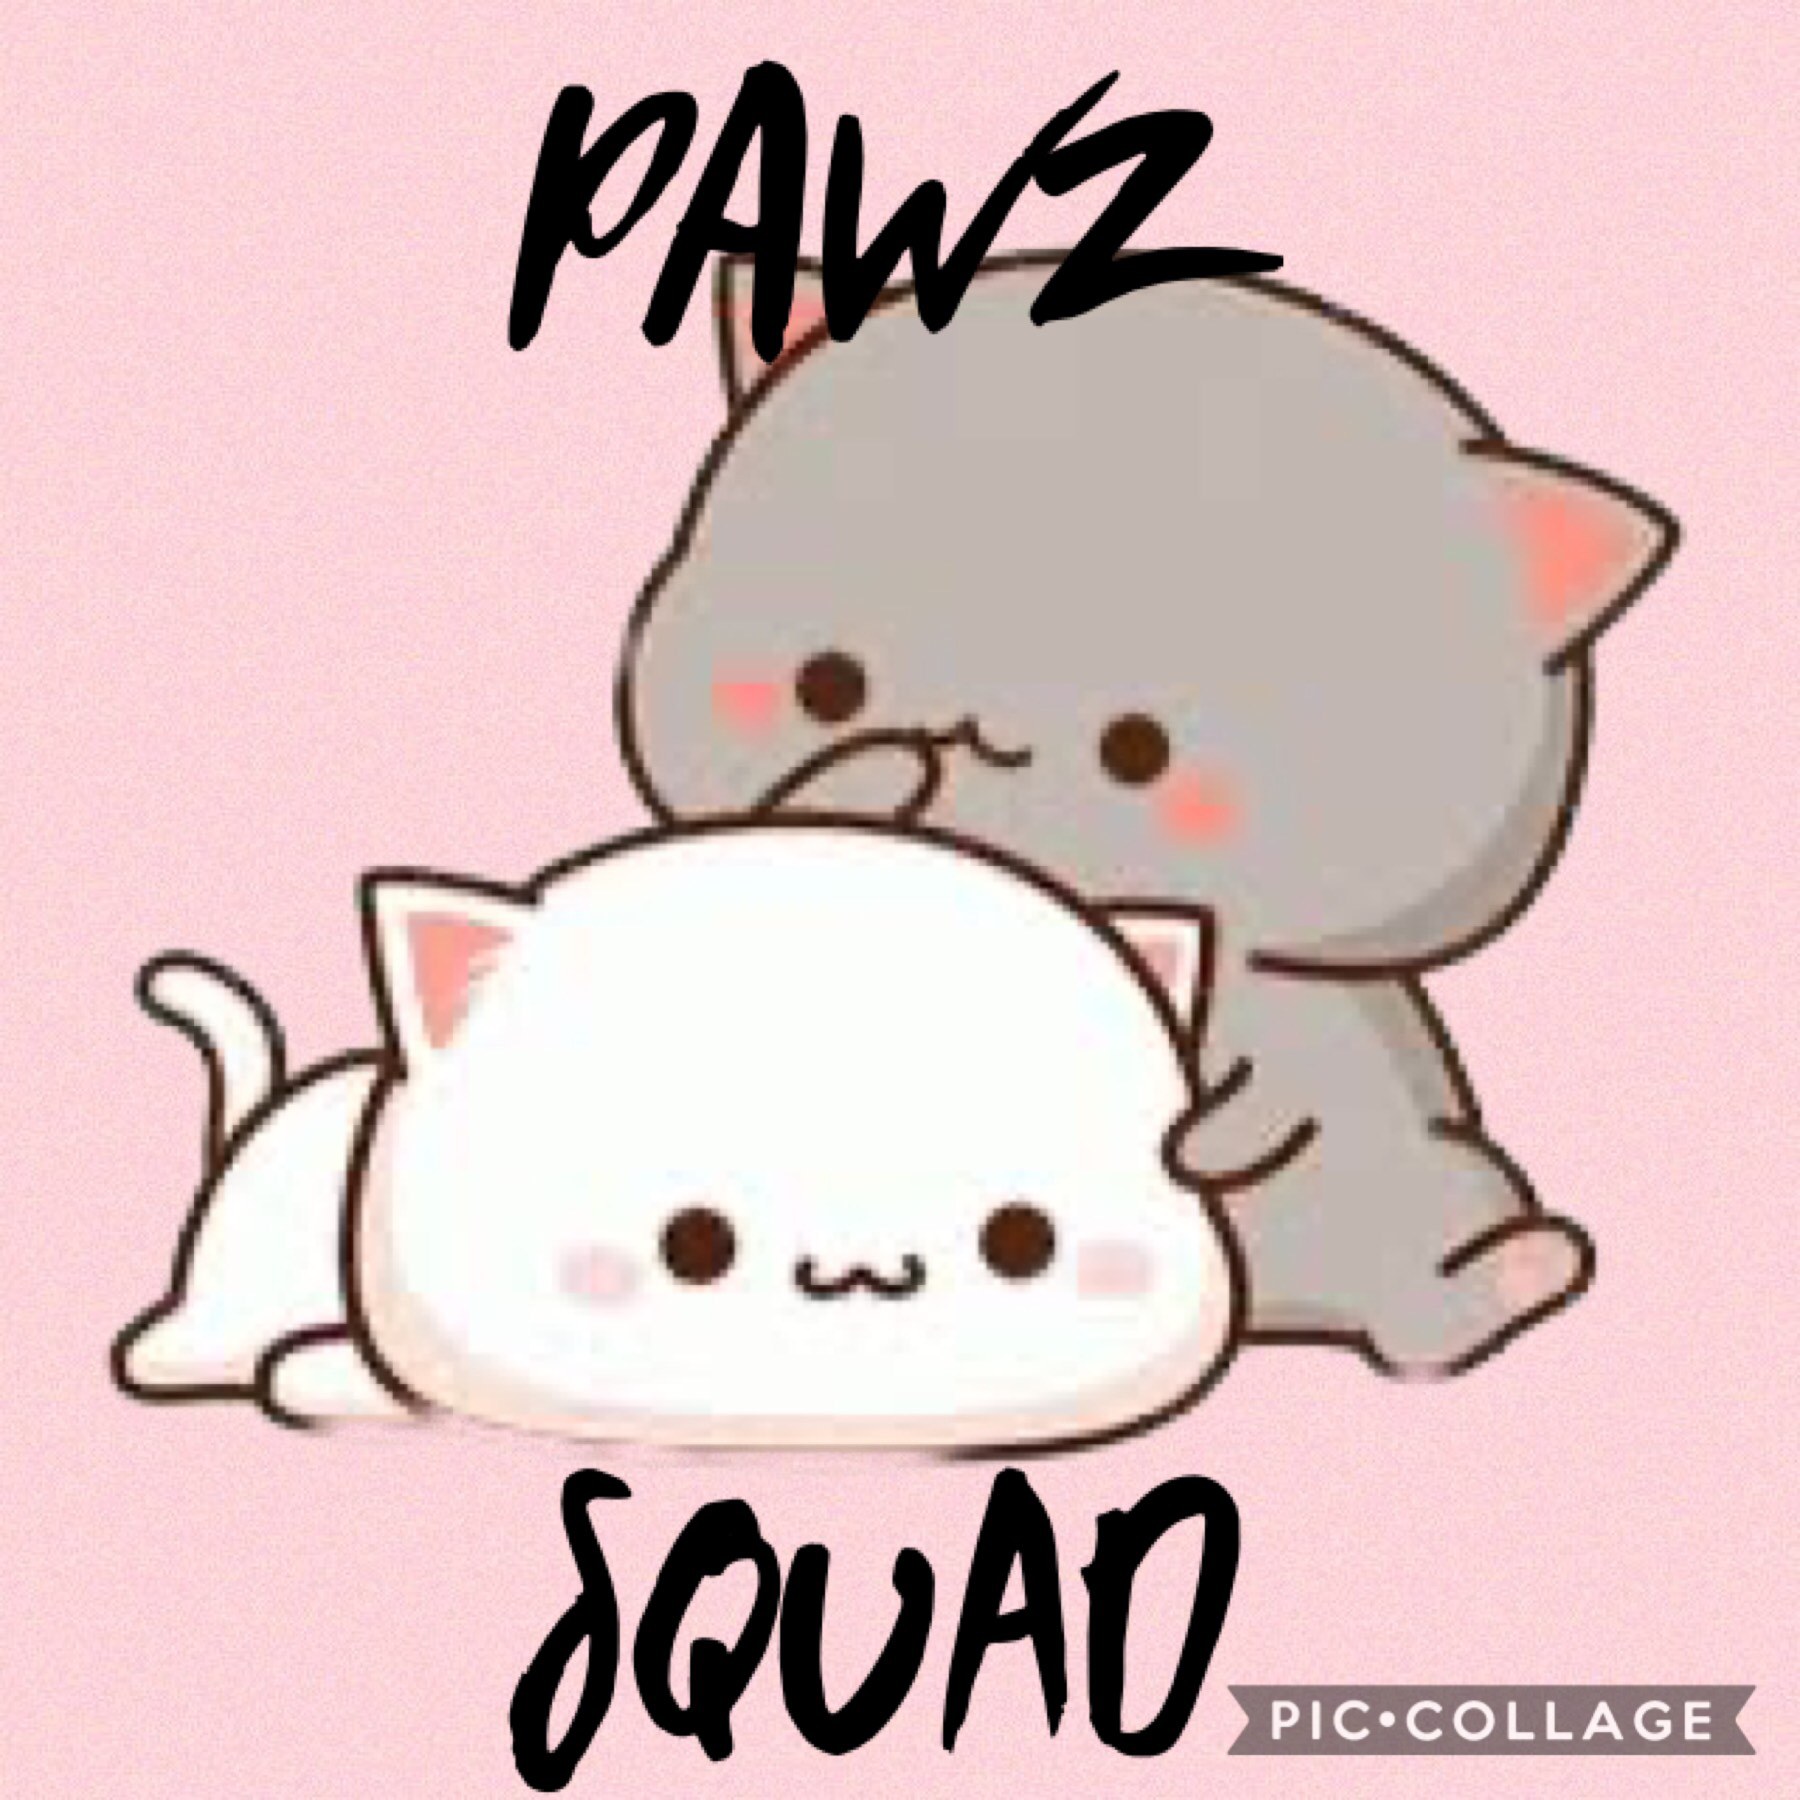 Pawz Squad